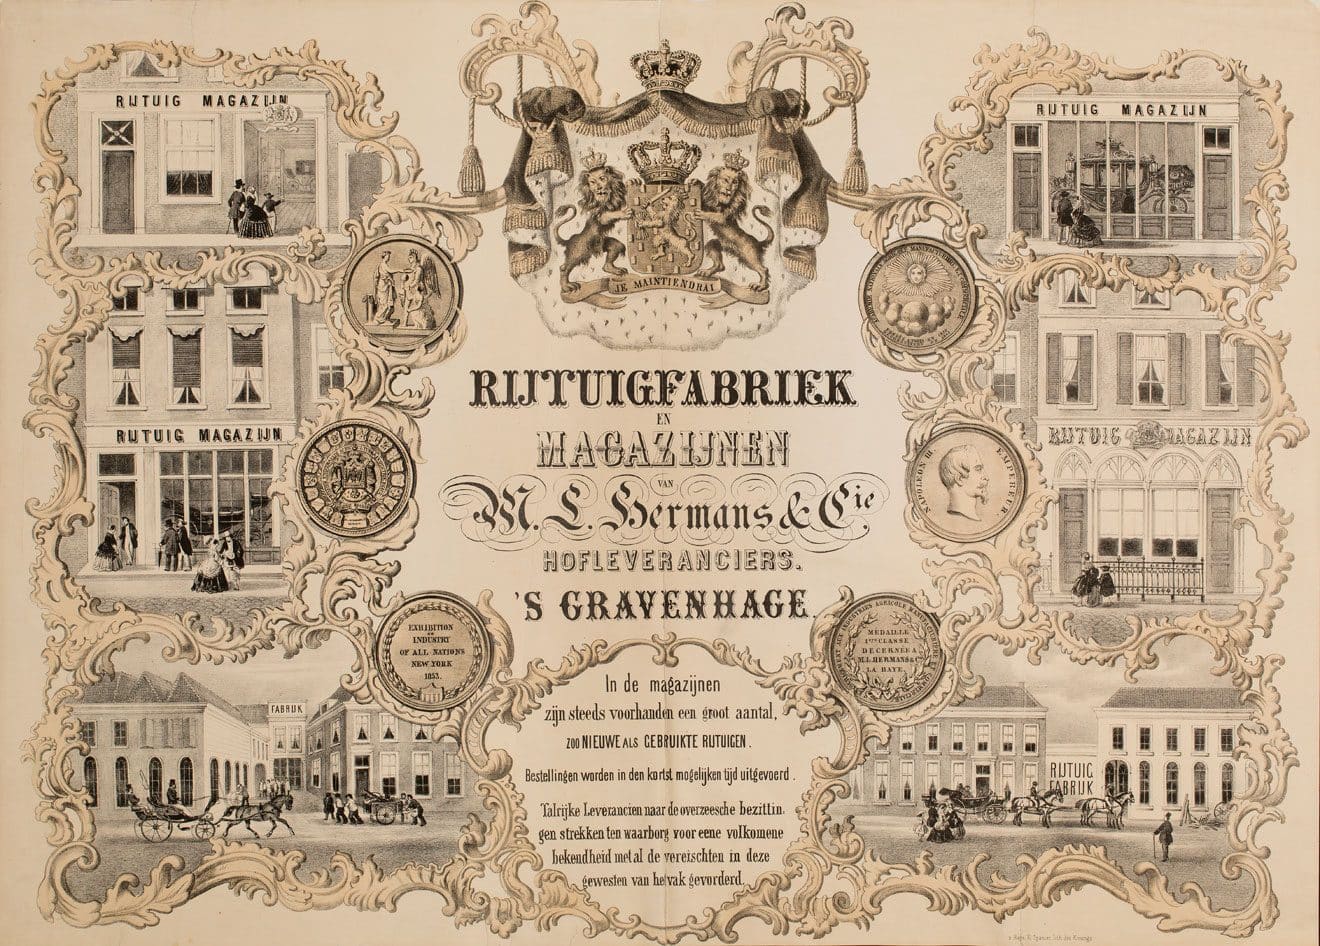 Rijtuifabriek Hermans, affiche, ca. 1860